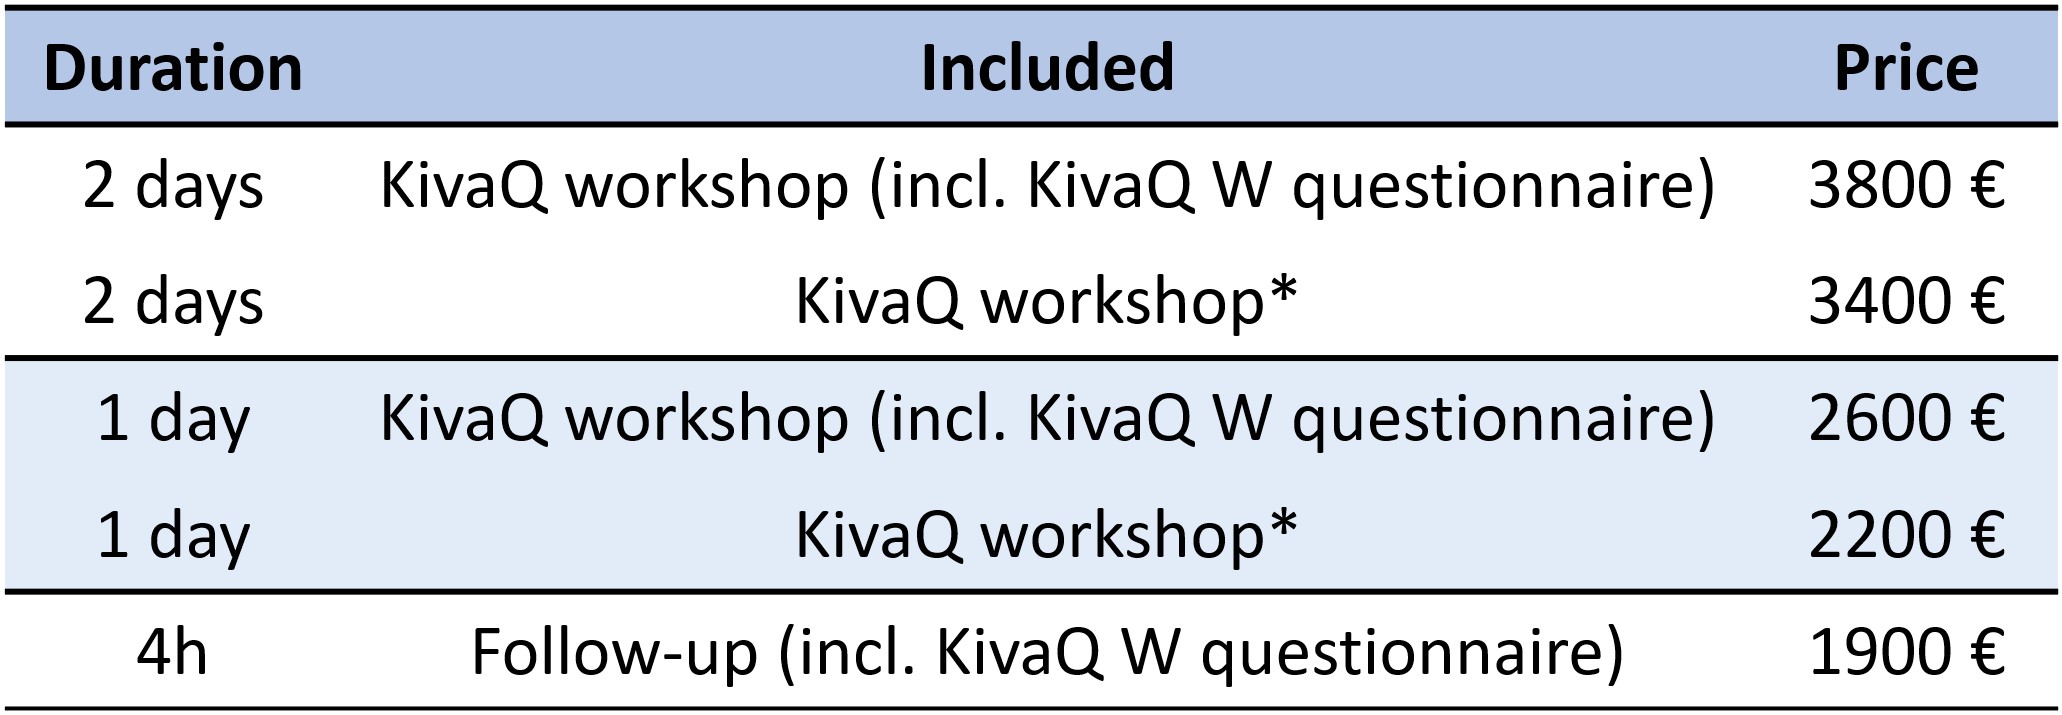 KivaQ workshop prices